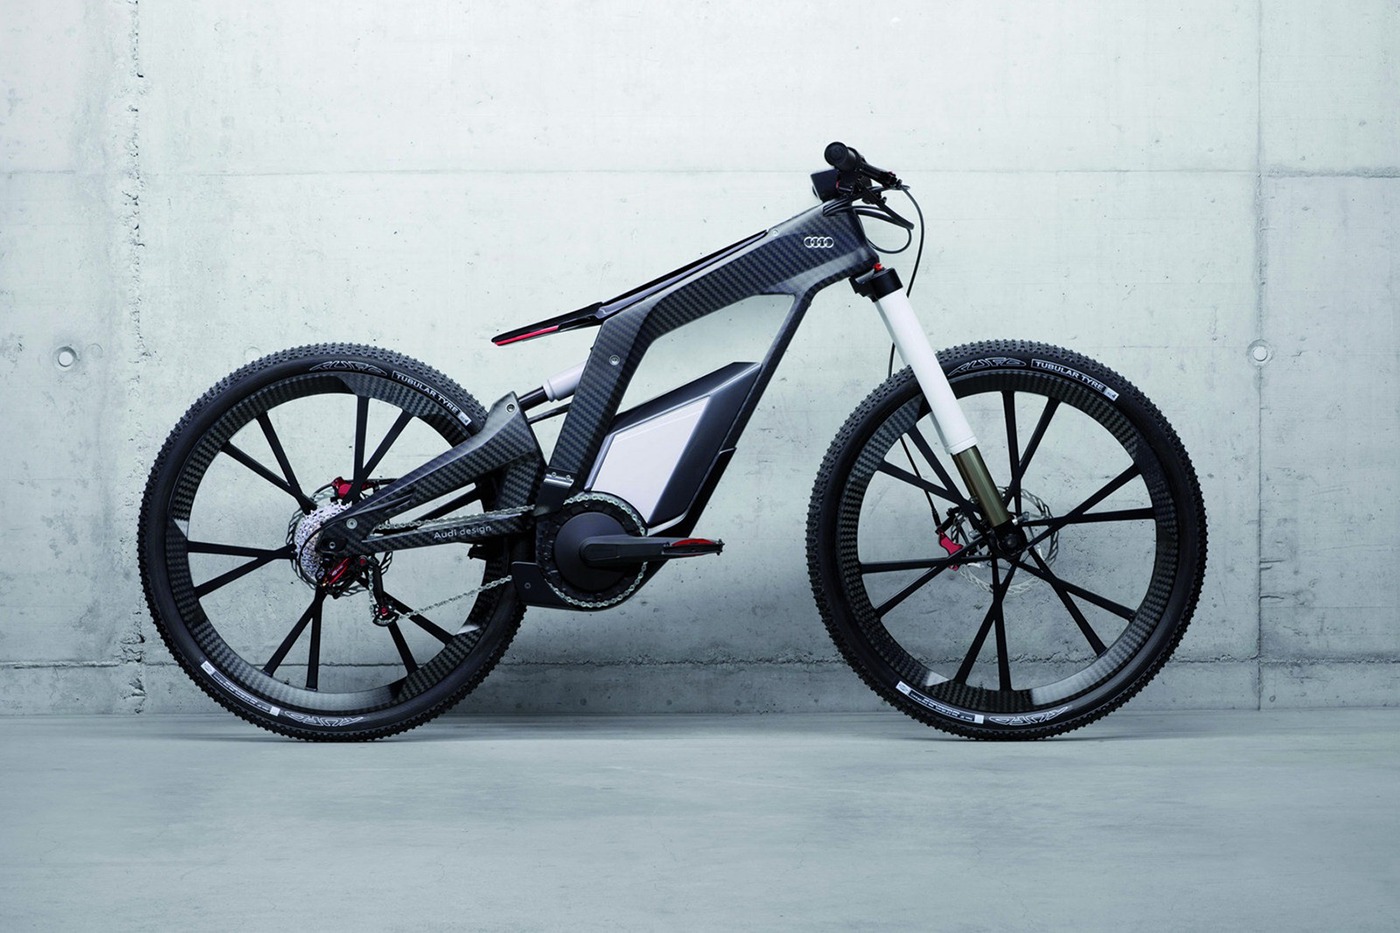 Audi Audi design audi e-bike E-Bike concept bike Concept Bicycle Bicycle